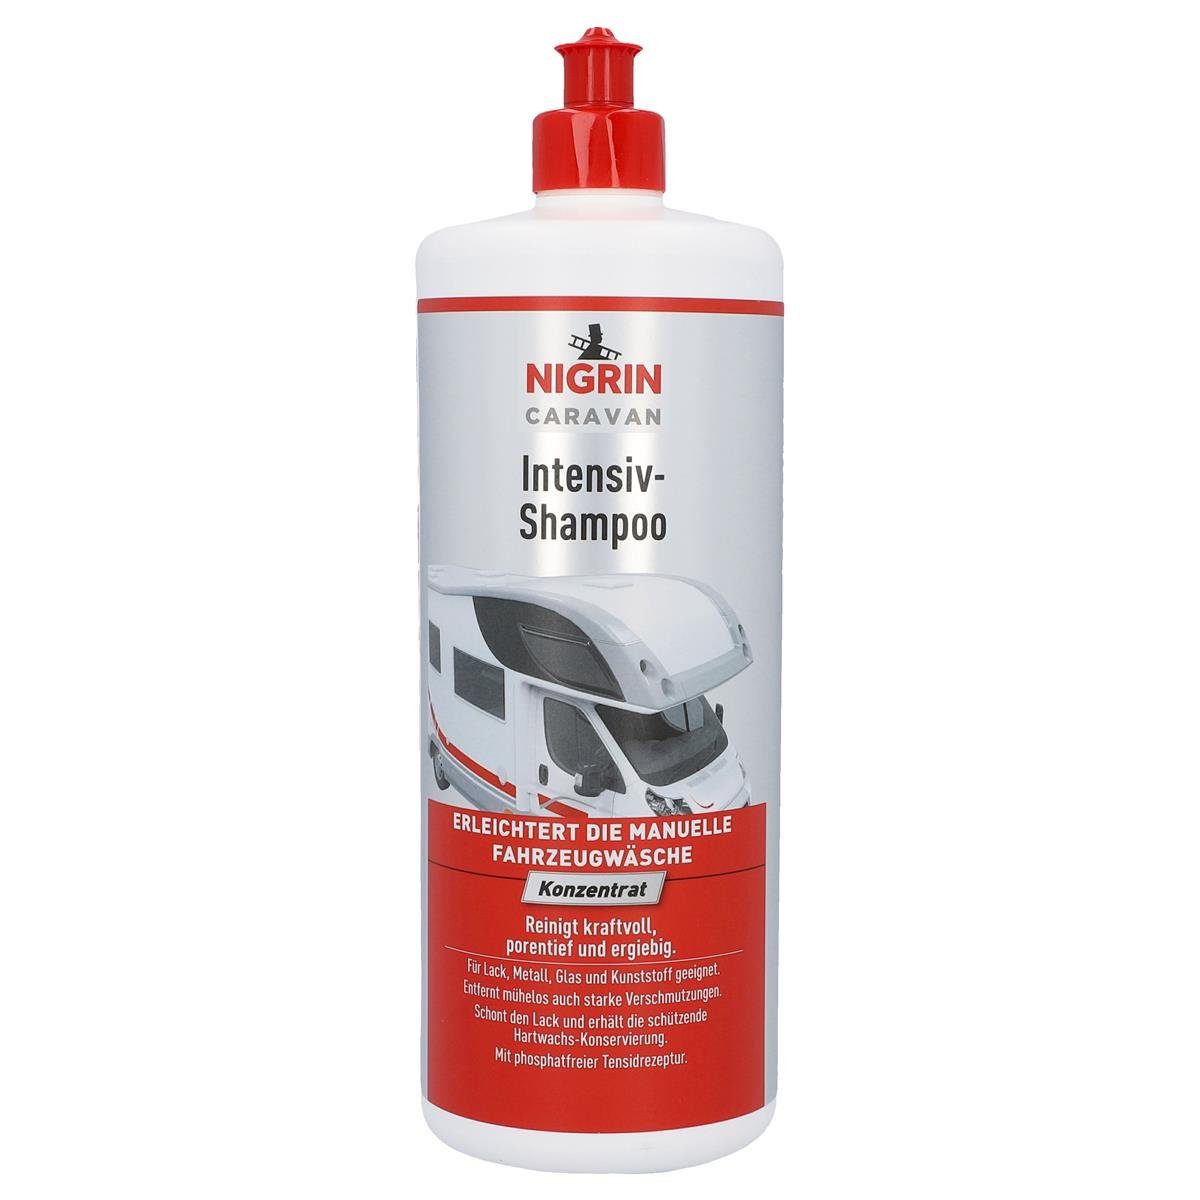 NIGRIN NIGRIN Caravan Intensiv-Shampoo 1L - Reinigt kraftvoll & porentief (1e Auto-Reinigungsmittel | Autopflege